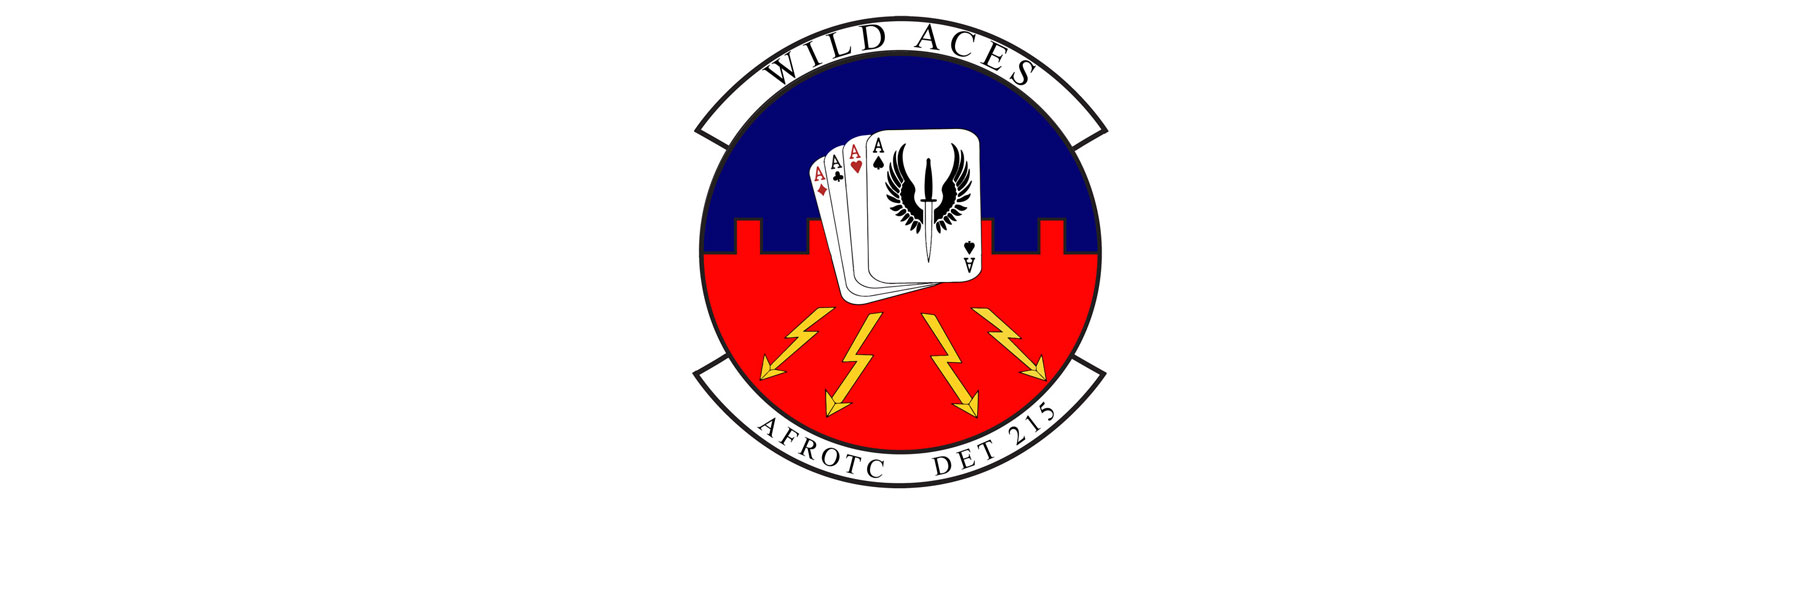 Detachment 215 logo